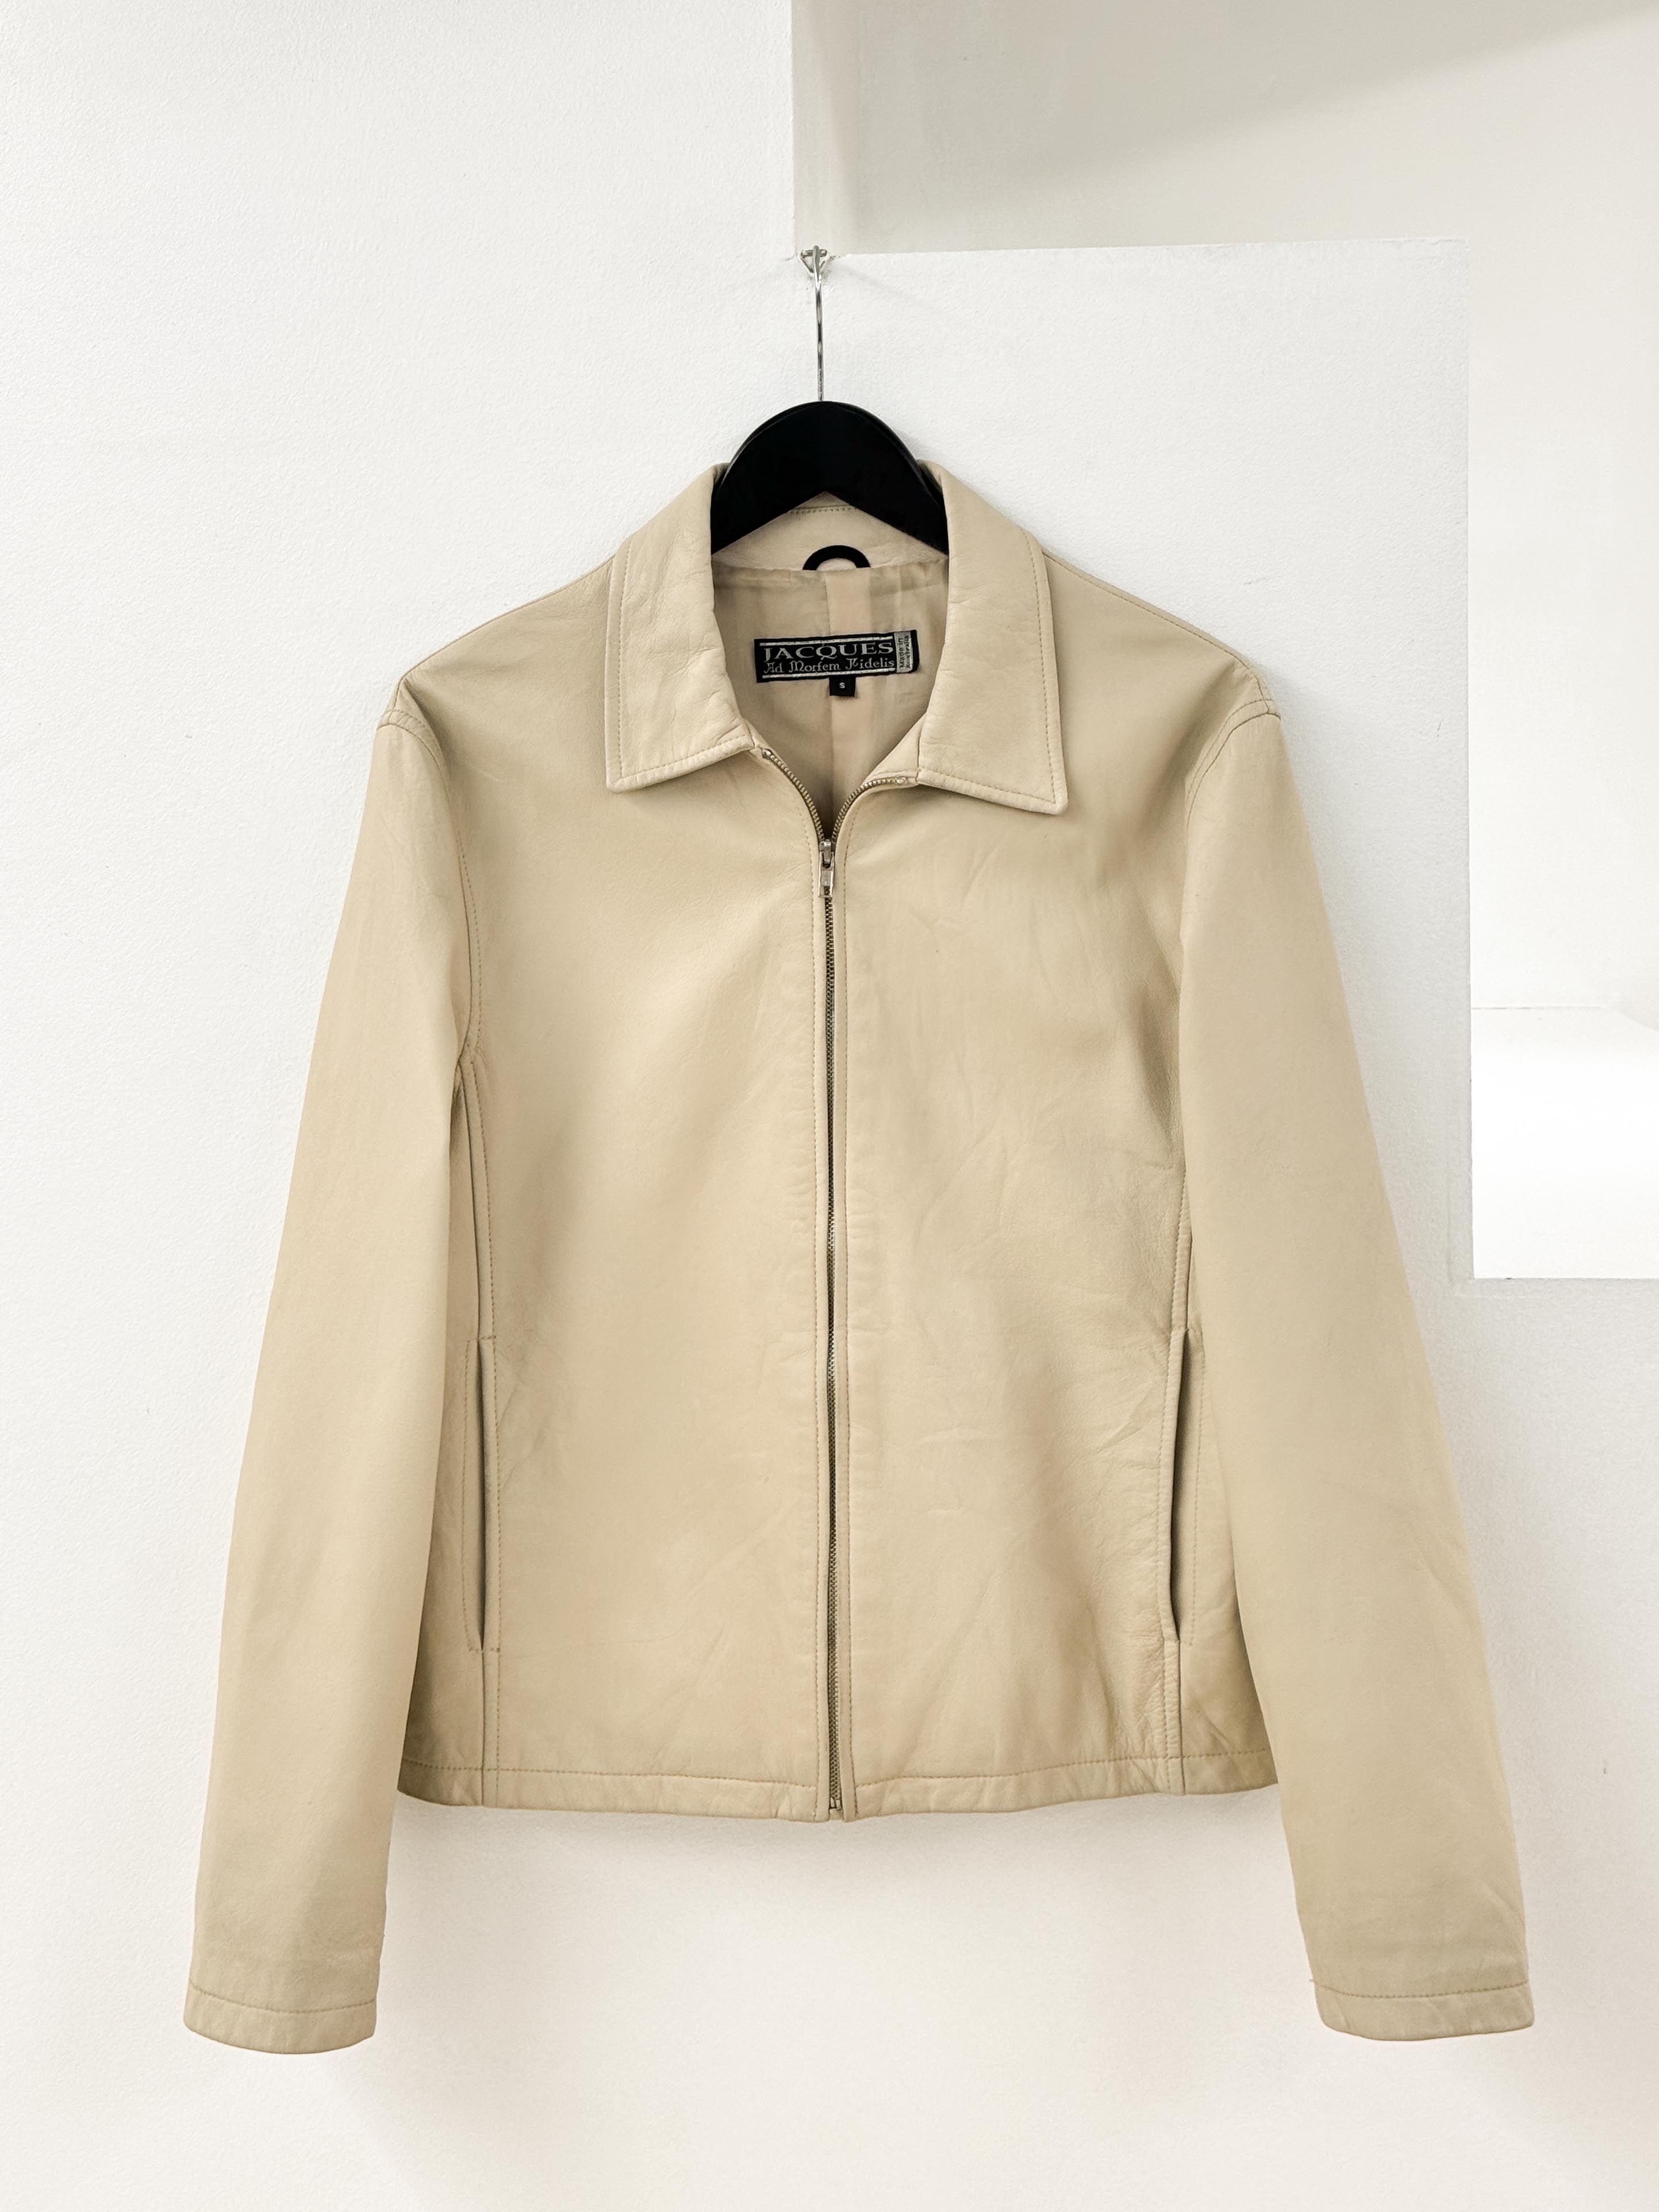 Jacques ad morfem fidelis leather jacket